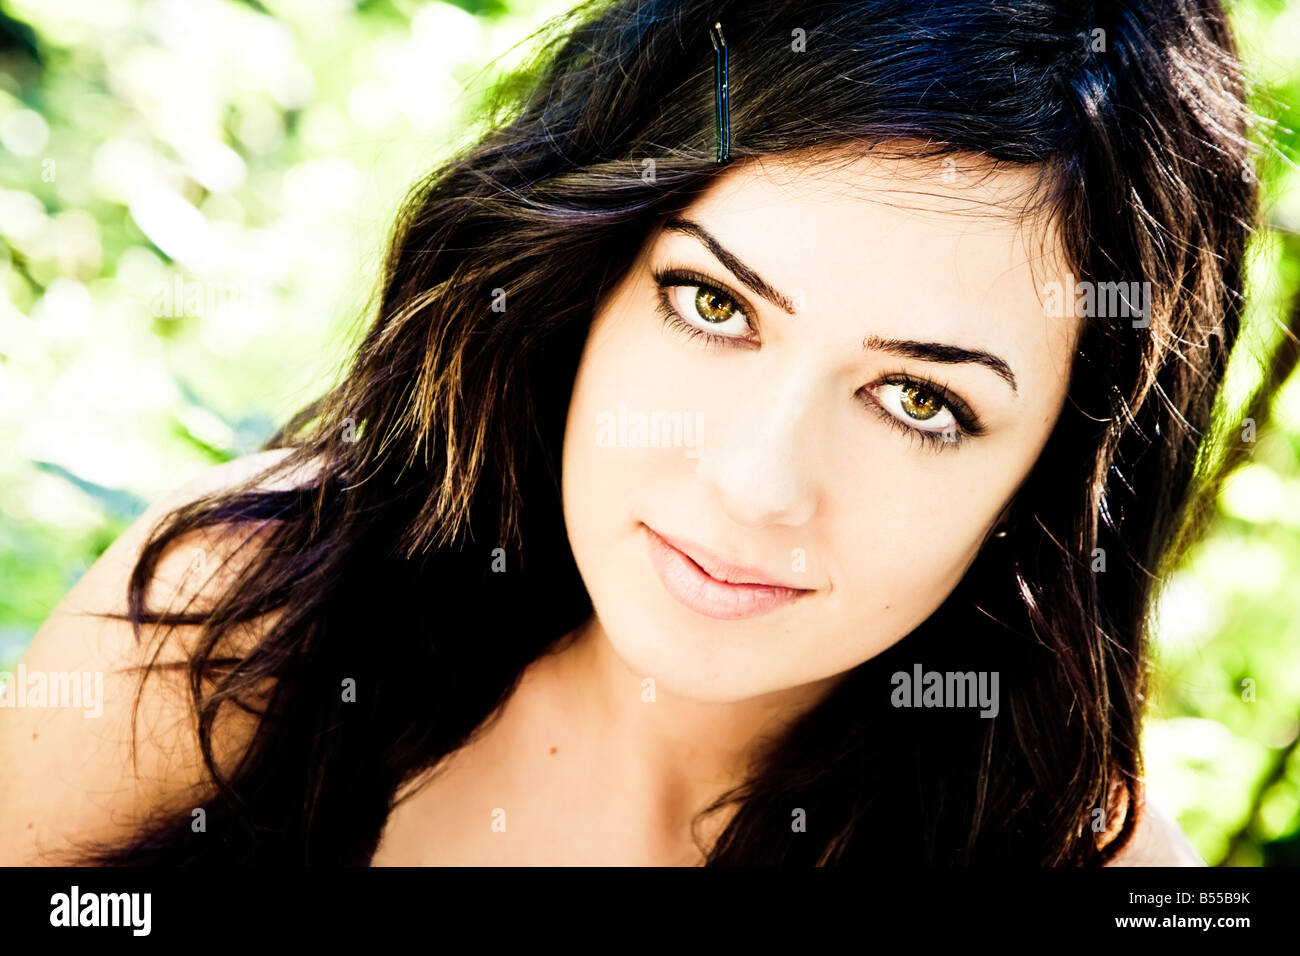 Beautiful woman with impressive green eyes staring at camera Stock Photo